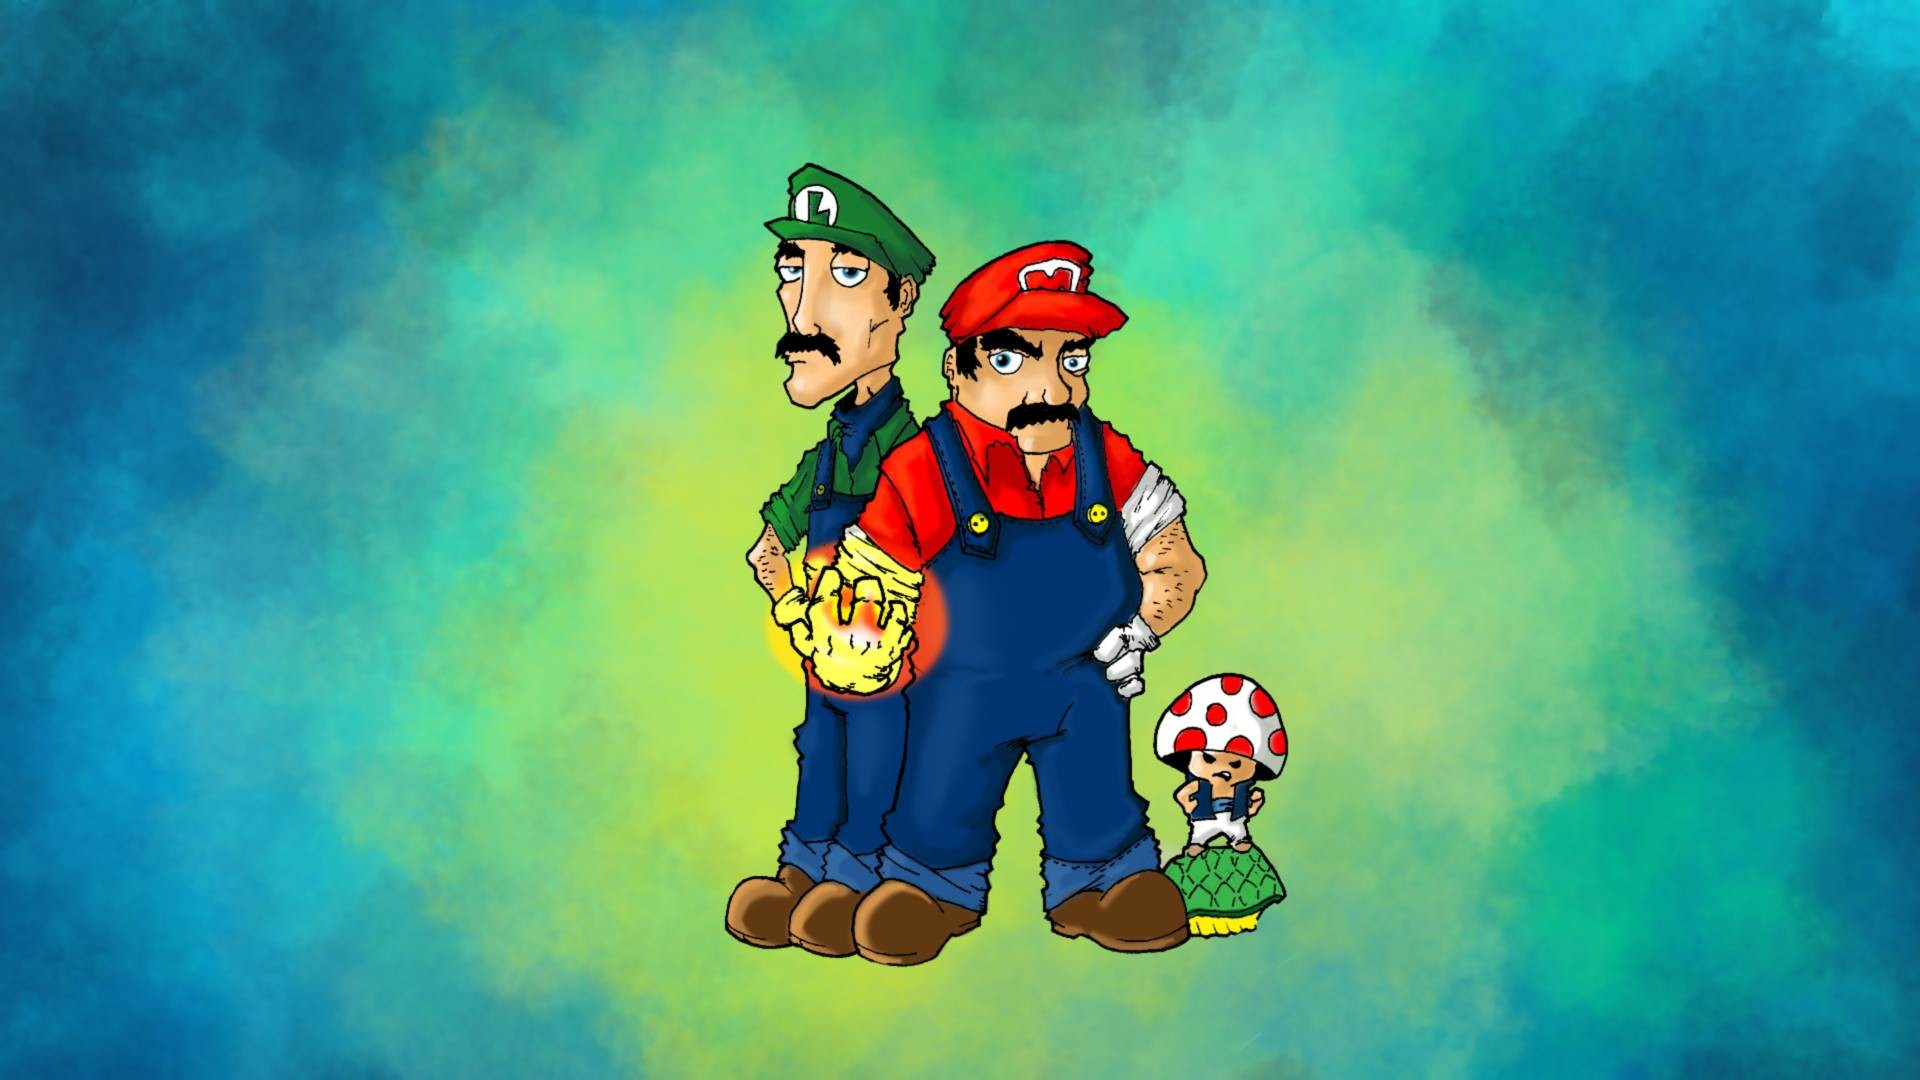 1920x1080 Luigi and Mario Super Mario Wallpaper.